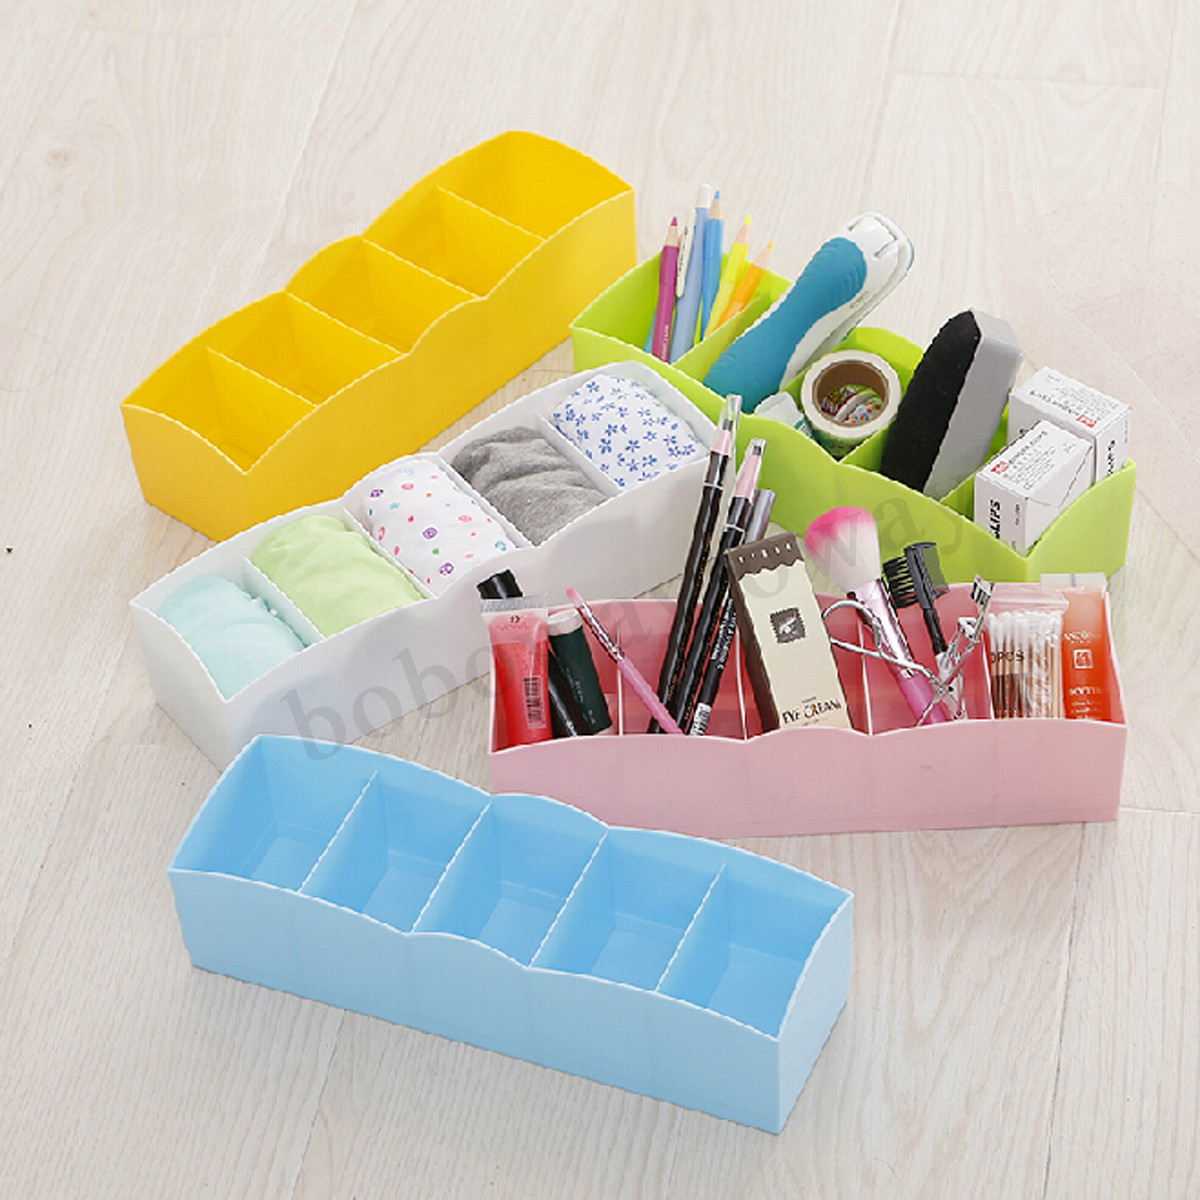 Best ideas about DIY Socks Organizer
. Save or Pin DIY Plastic Underwear Bras Sock Ties Organizer Storage Box Now.